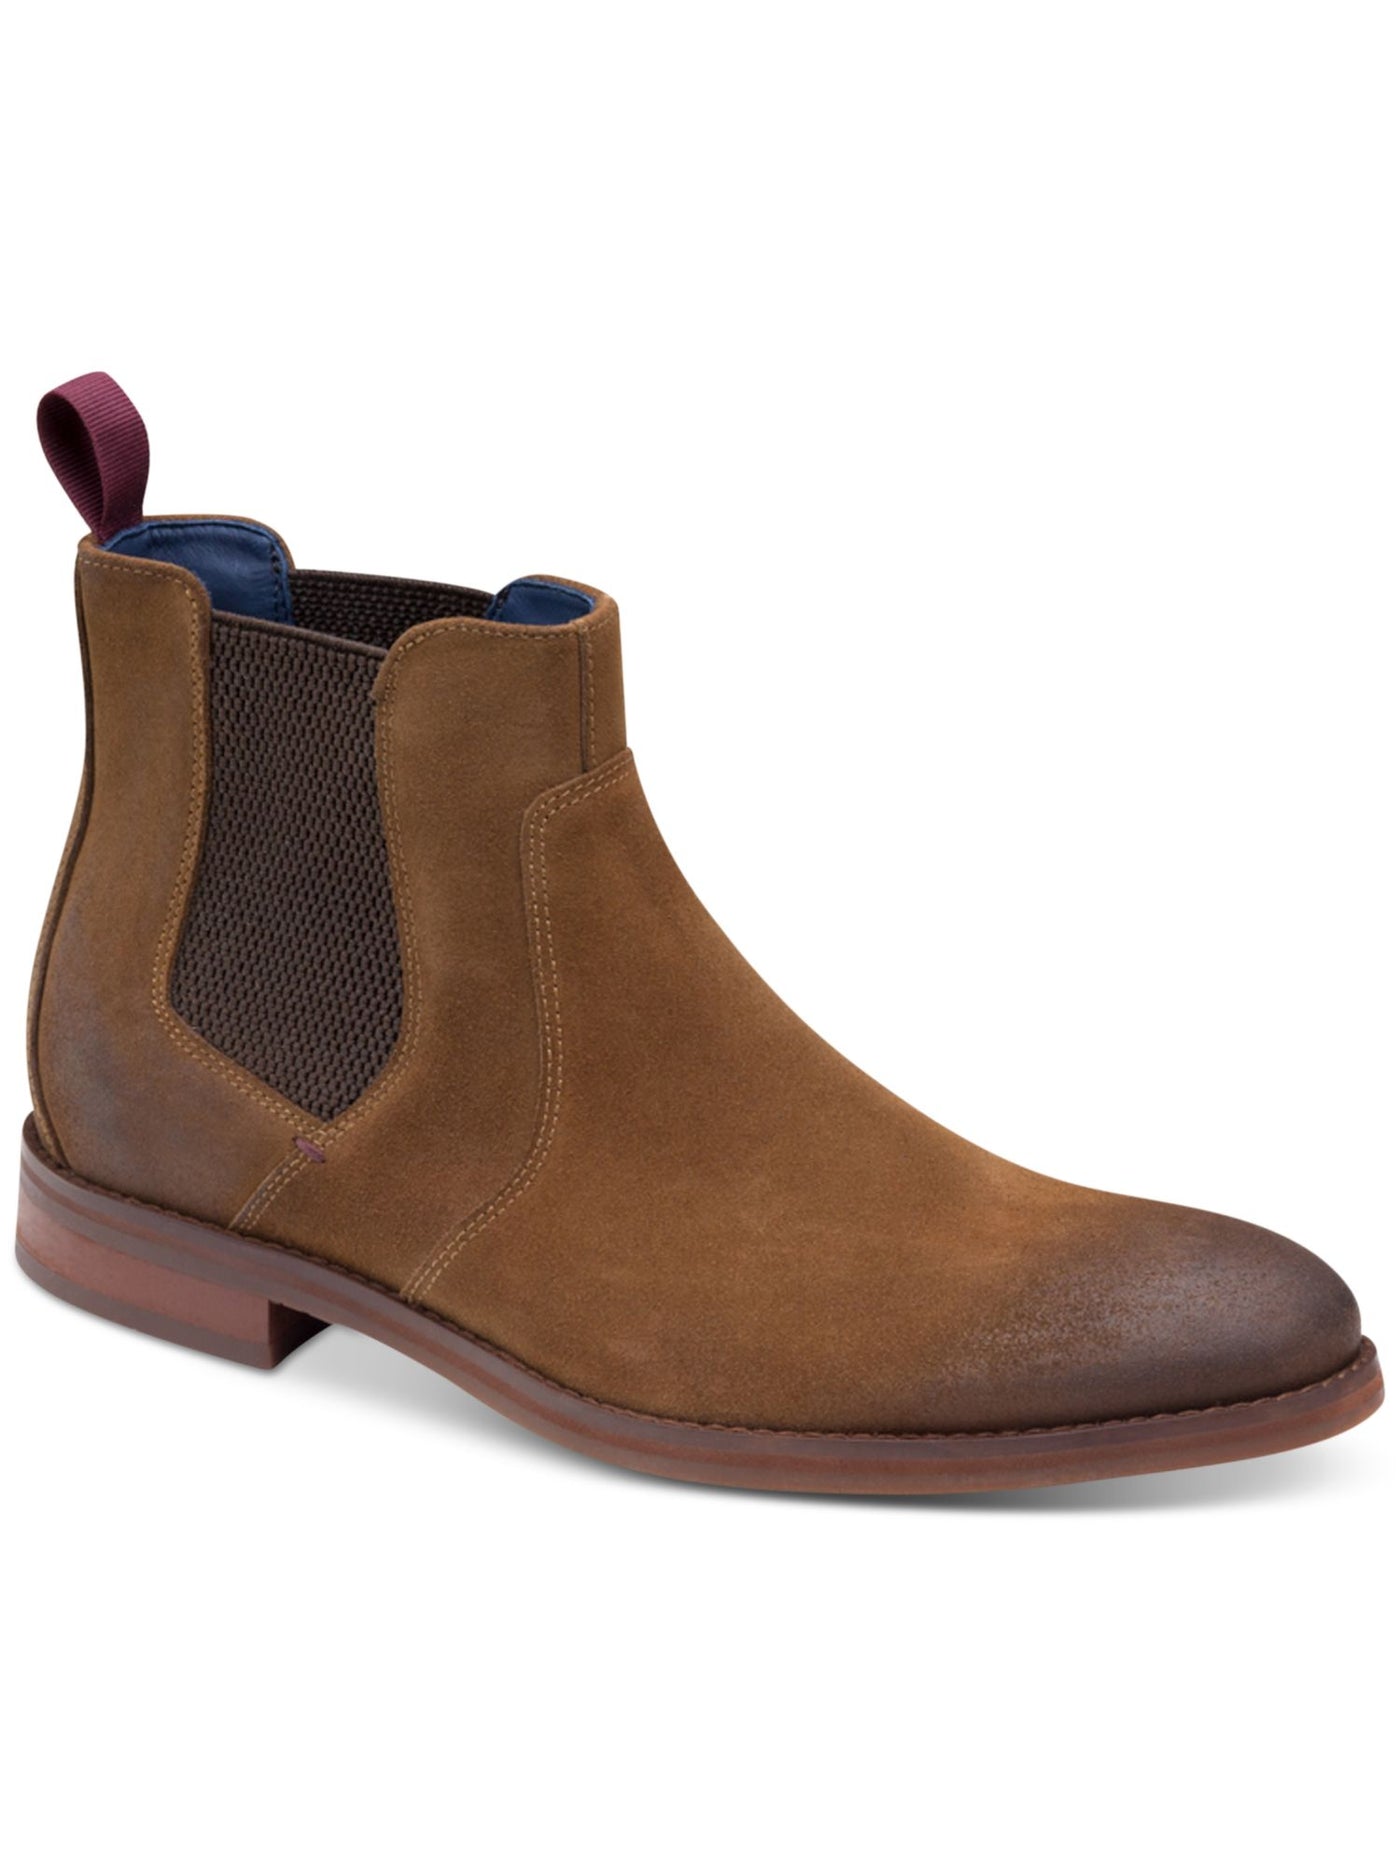 JOHNSTON & MURPHY Mens Brown Goring Comfort Danby Round Toe Block Heel Leather Boots Shoes 13 M